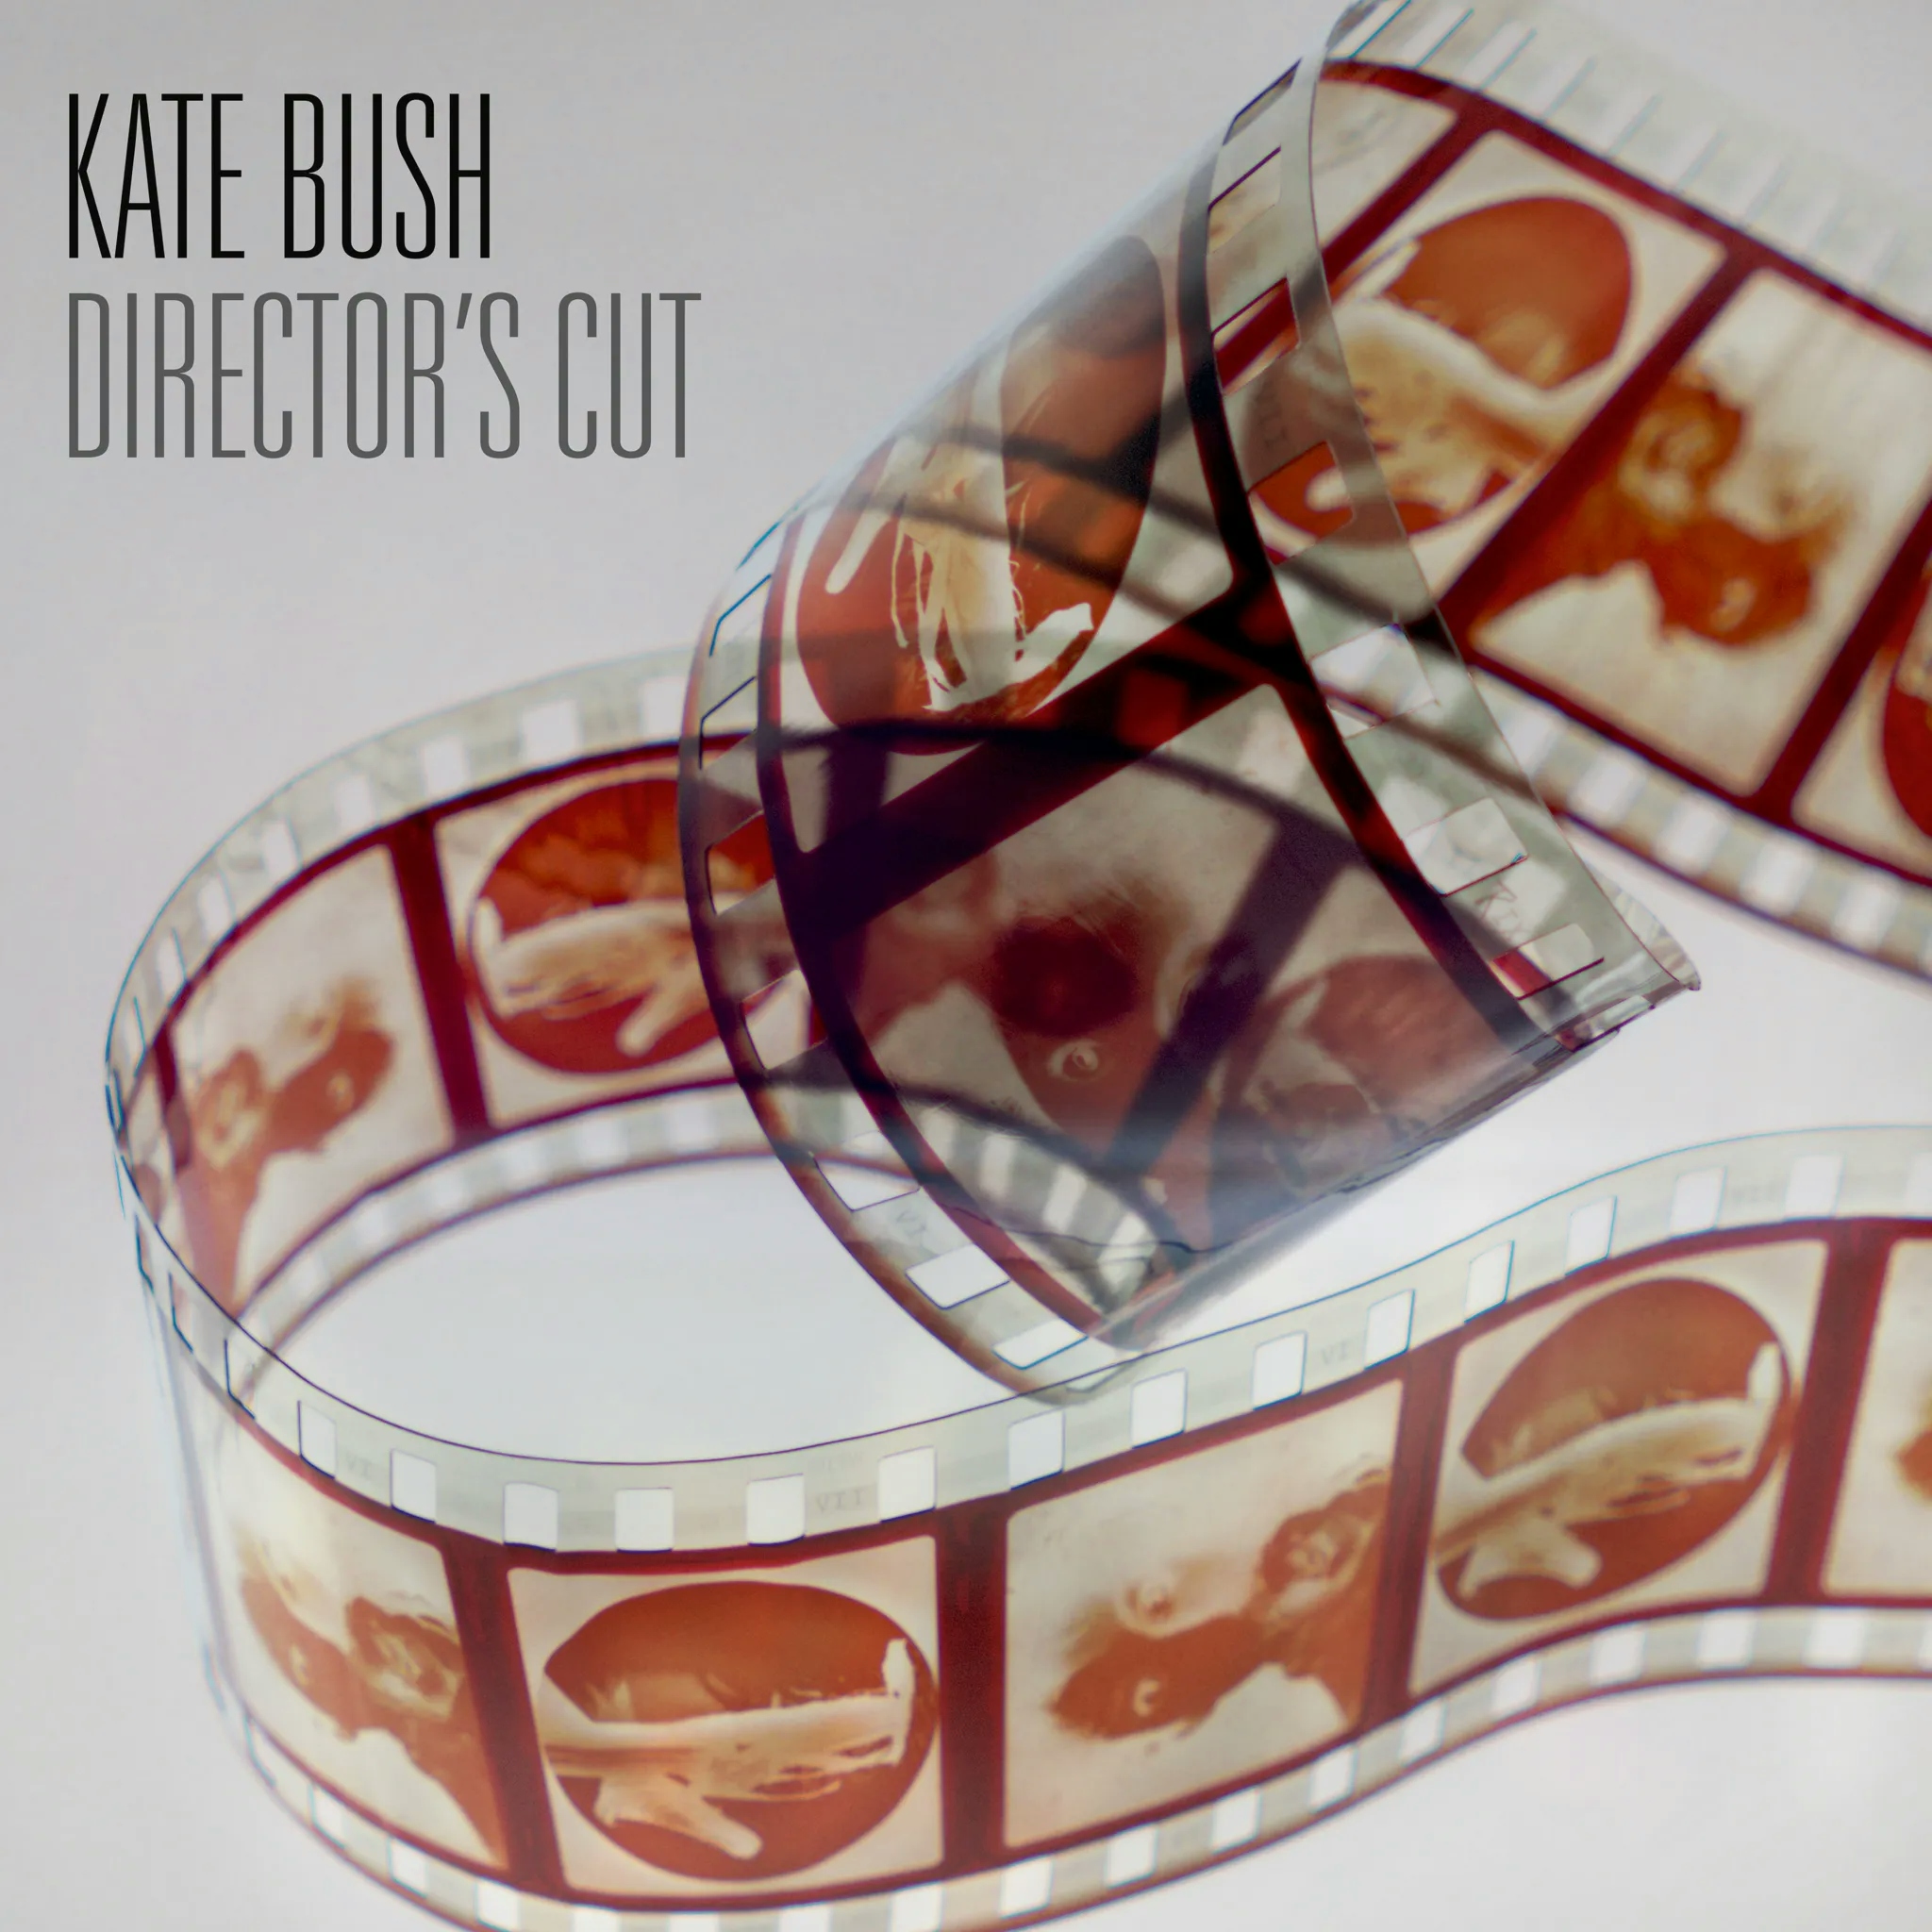 Album artwork for Director's Cut by Kate Bush